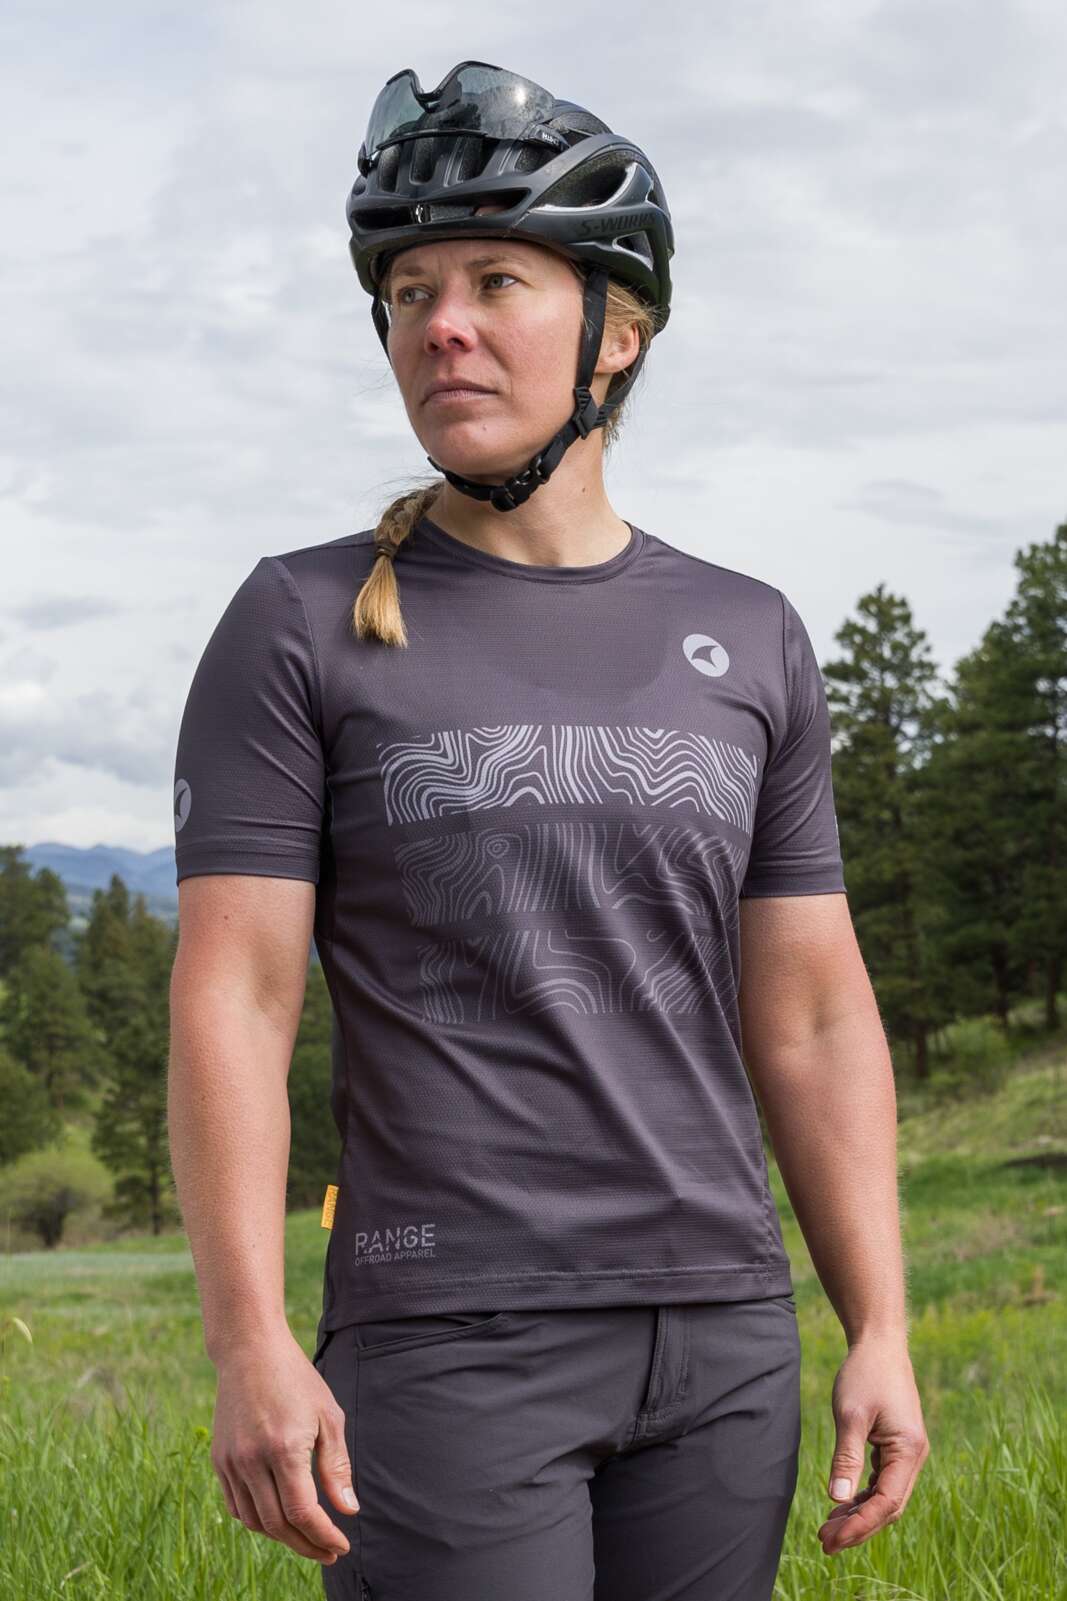 Women's Mountain Bike Jerseys - Front View